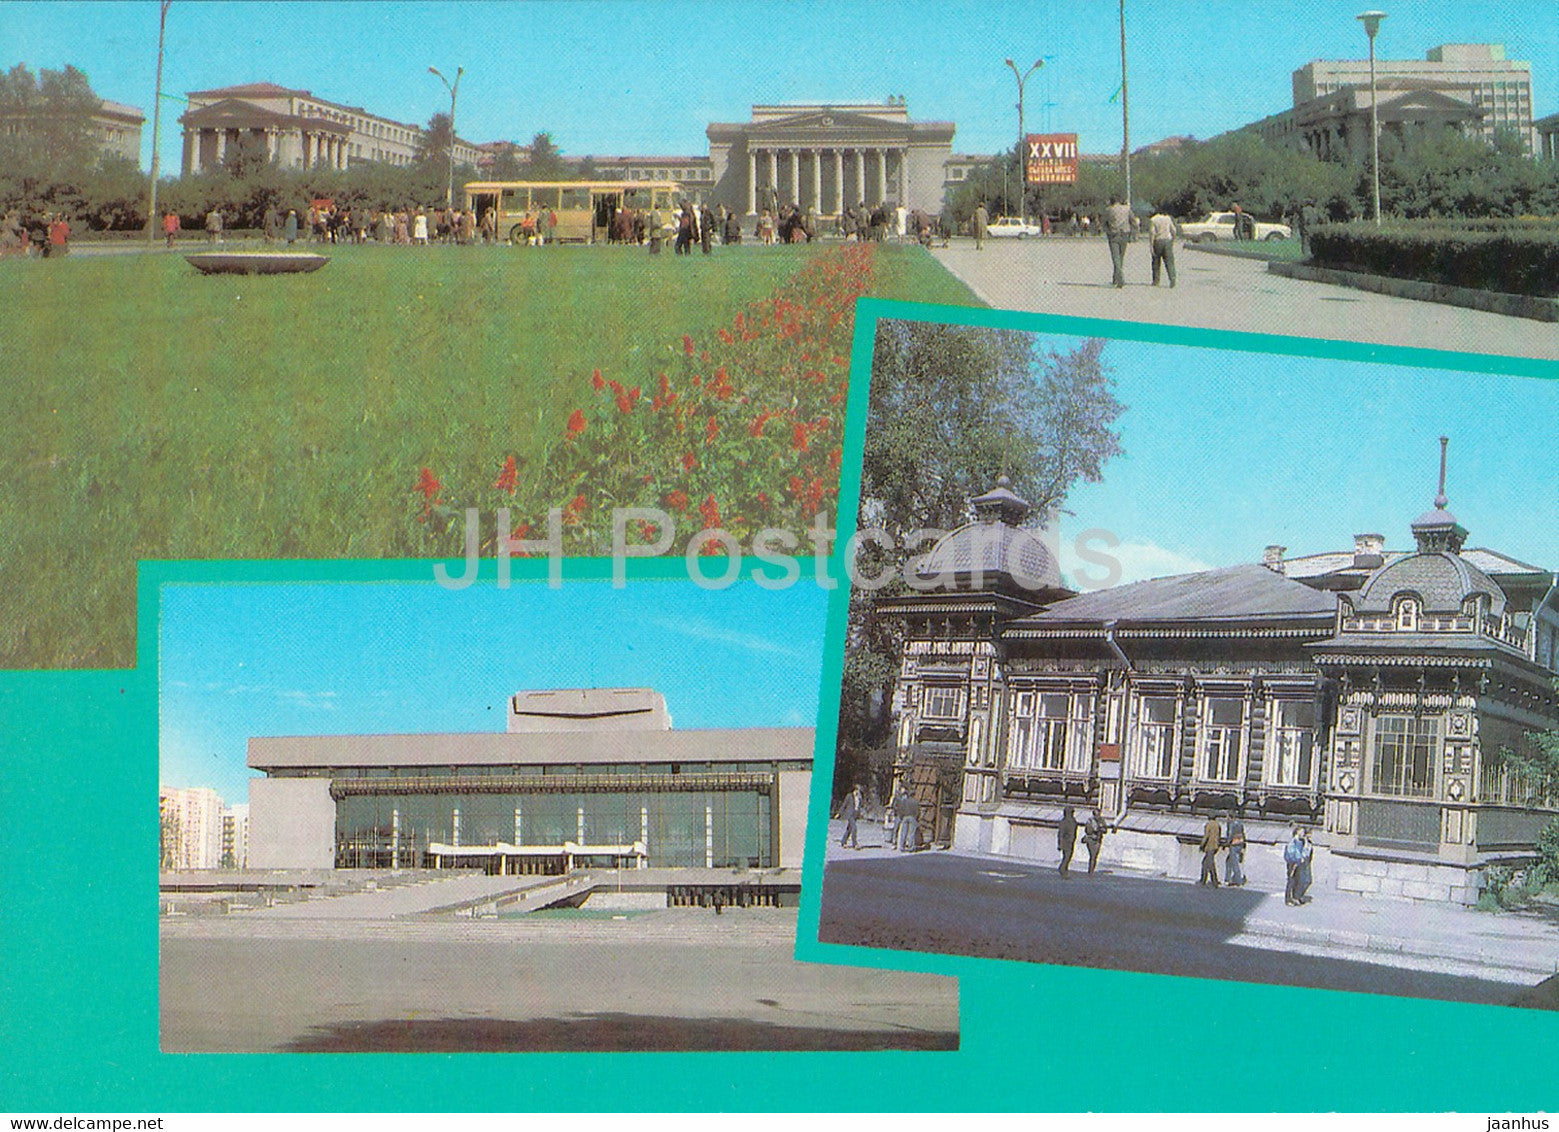 Sverdlovsk - Yekaterinburg - Ural Polytechnical Institute - Palace of Culture - 1987 Russia USSR - unused - JH Postcards